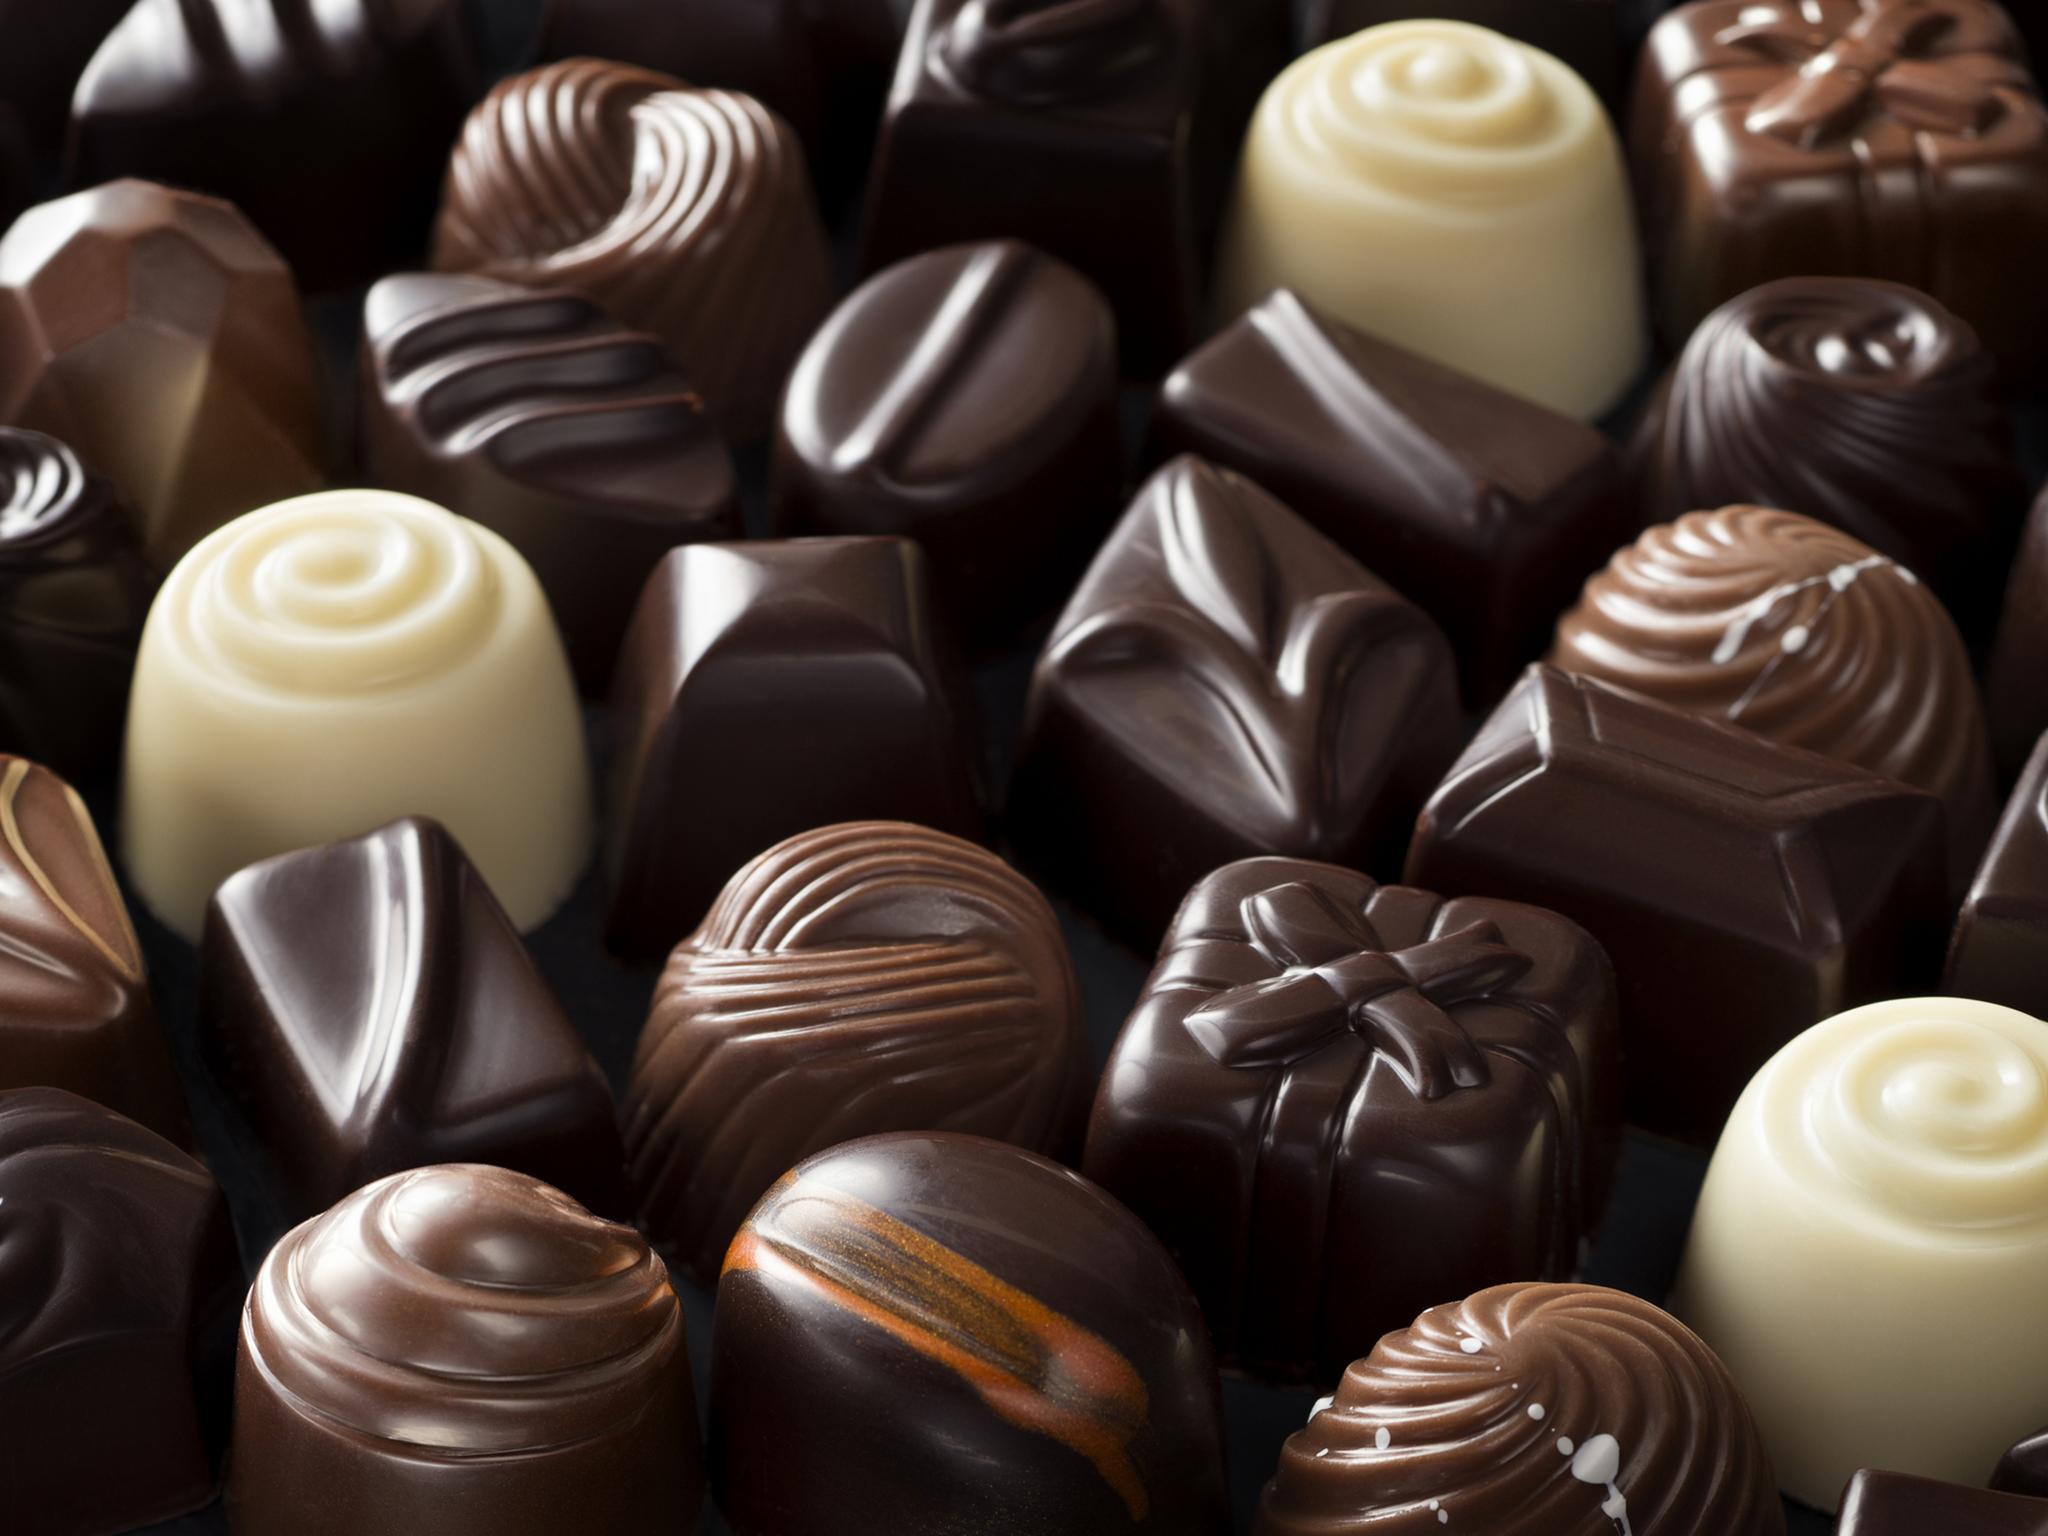 14 best luxury chocolate boxes